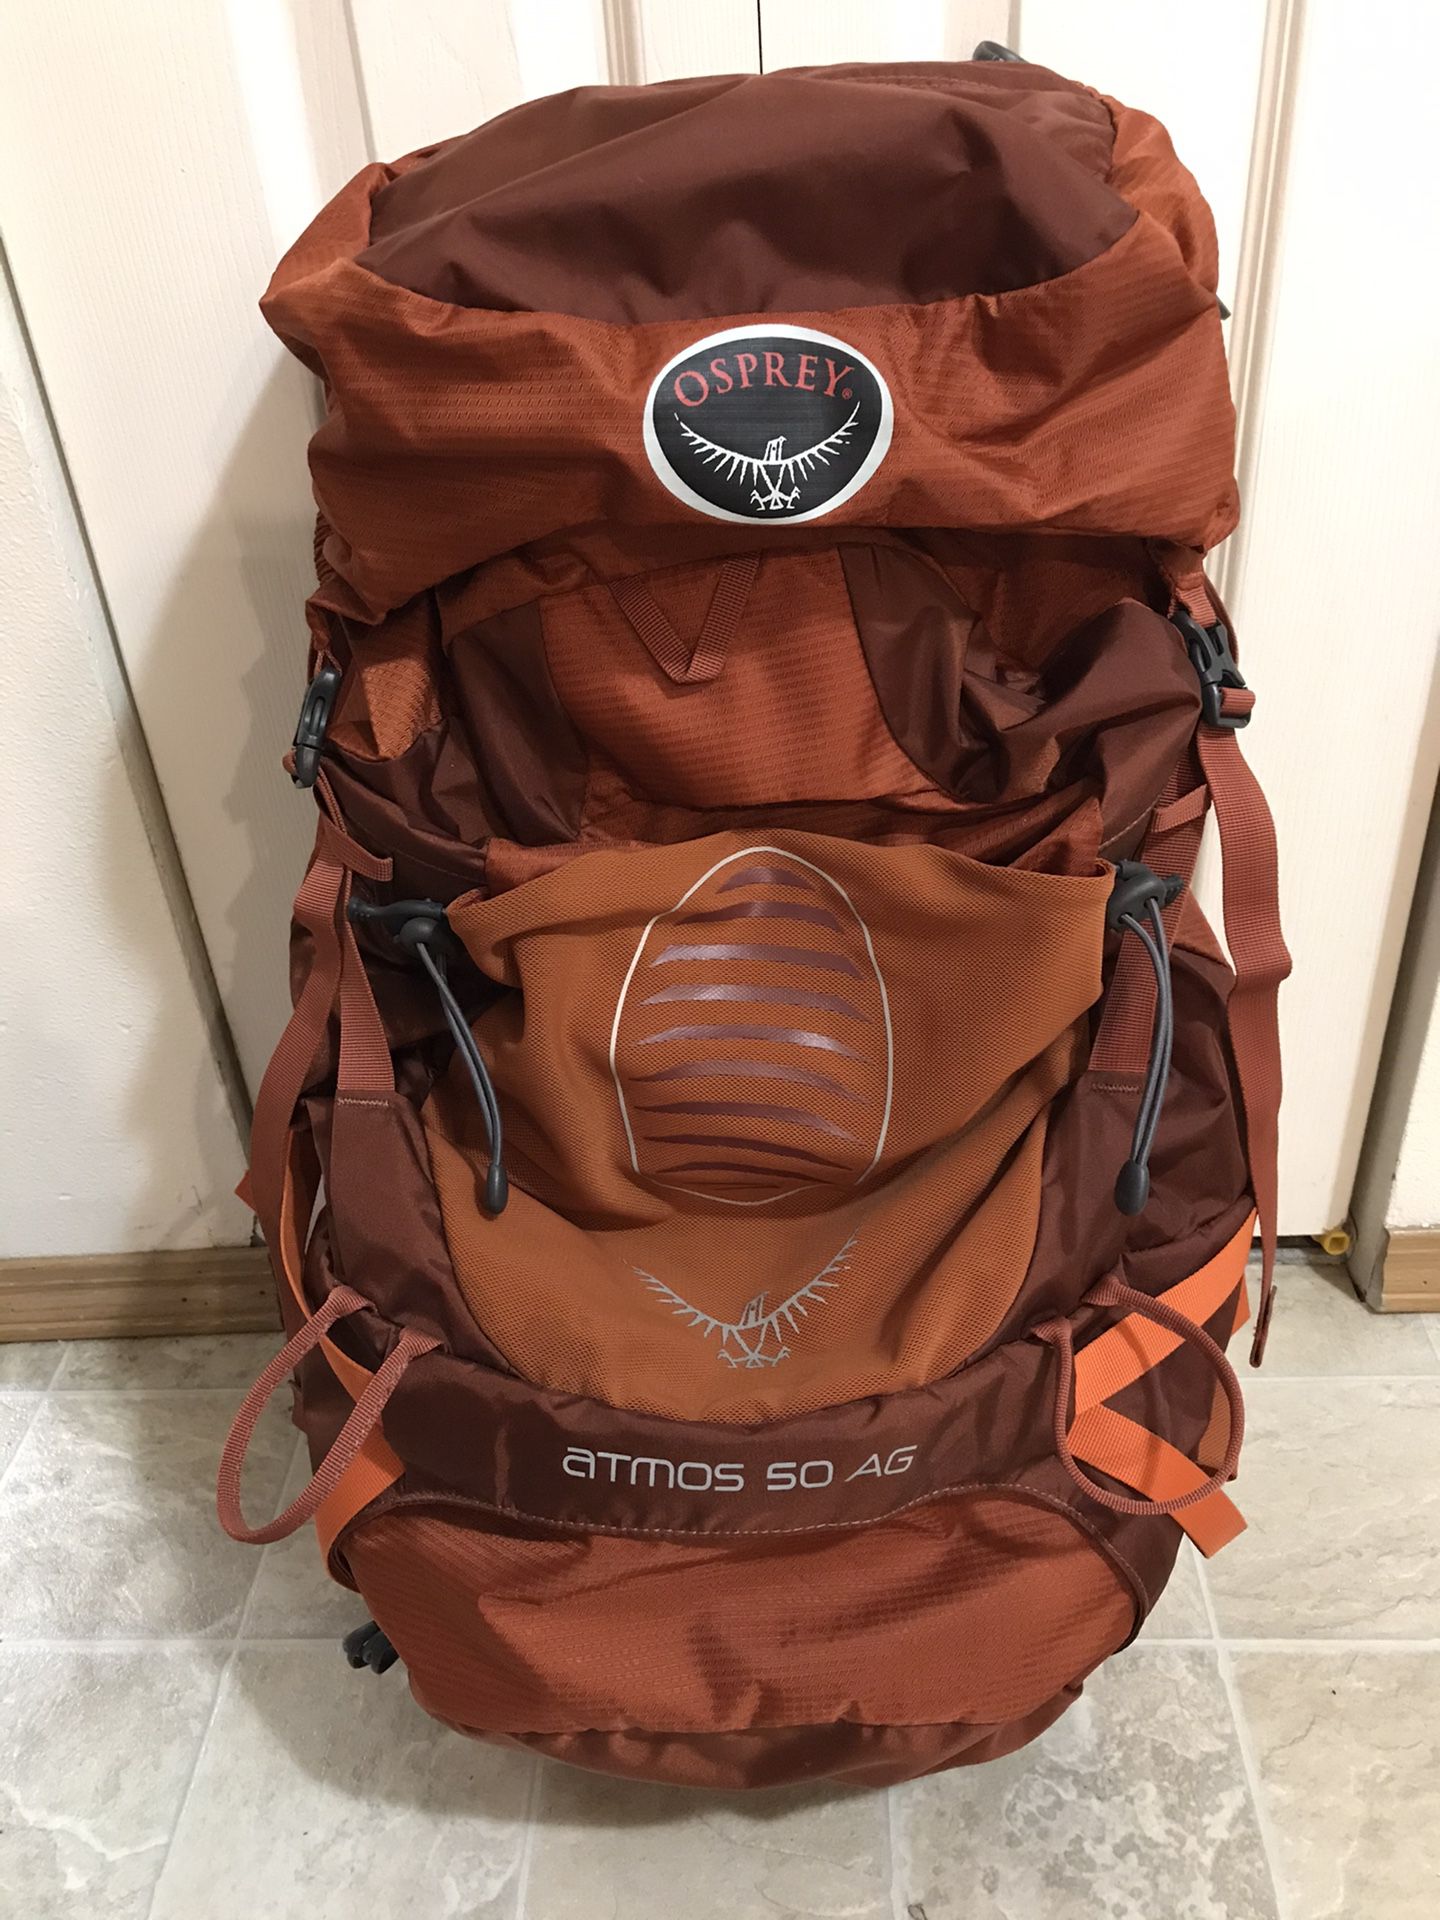 Osprey 50l hiking/backpacking pack